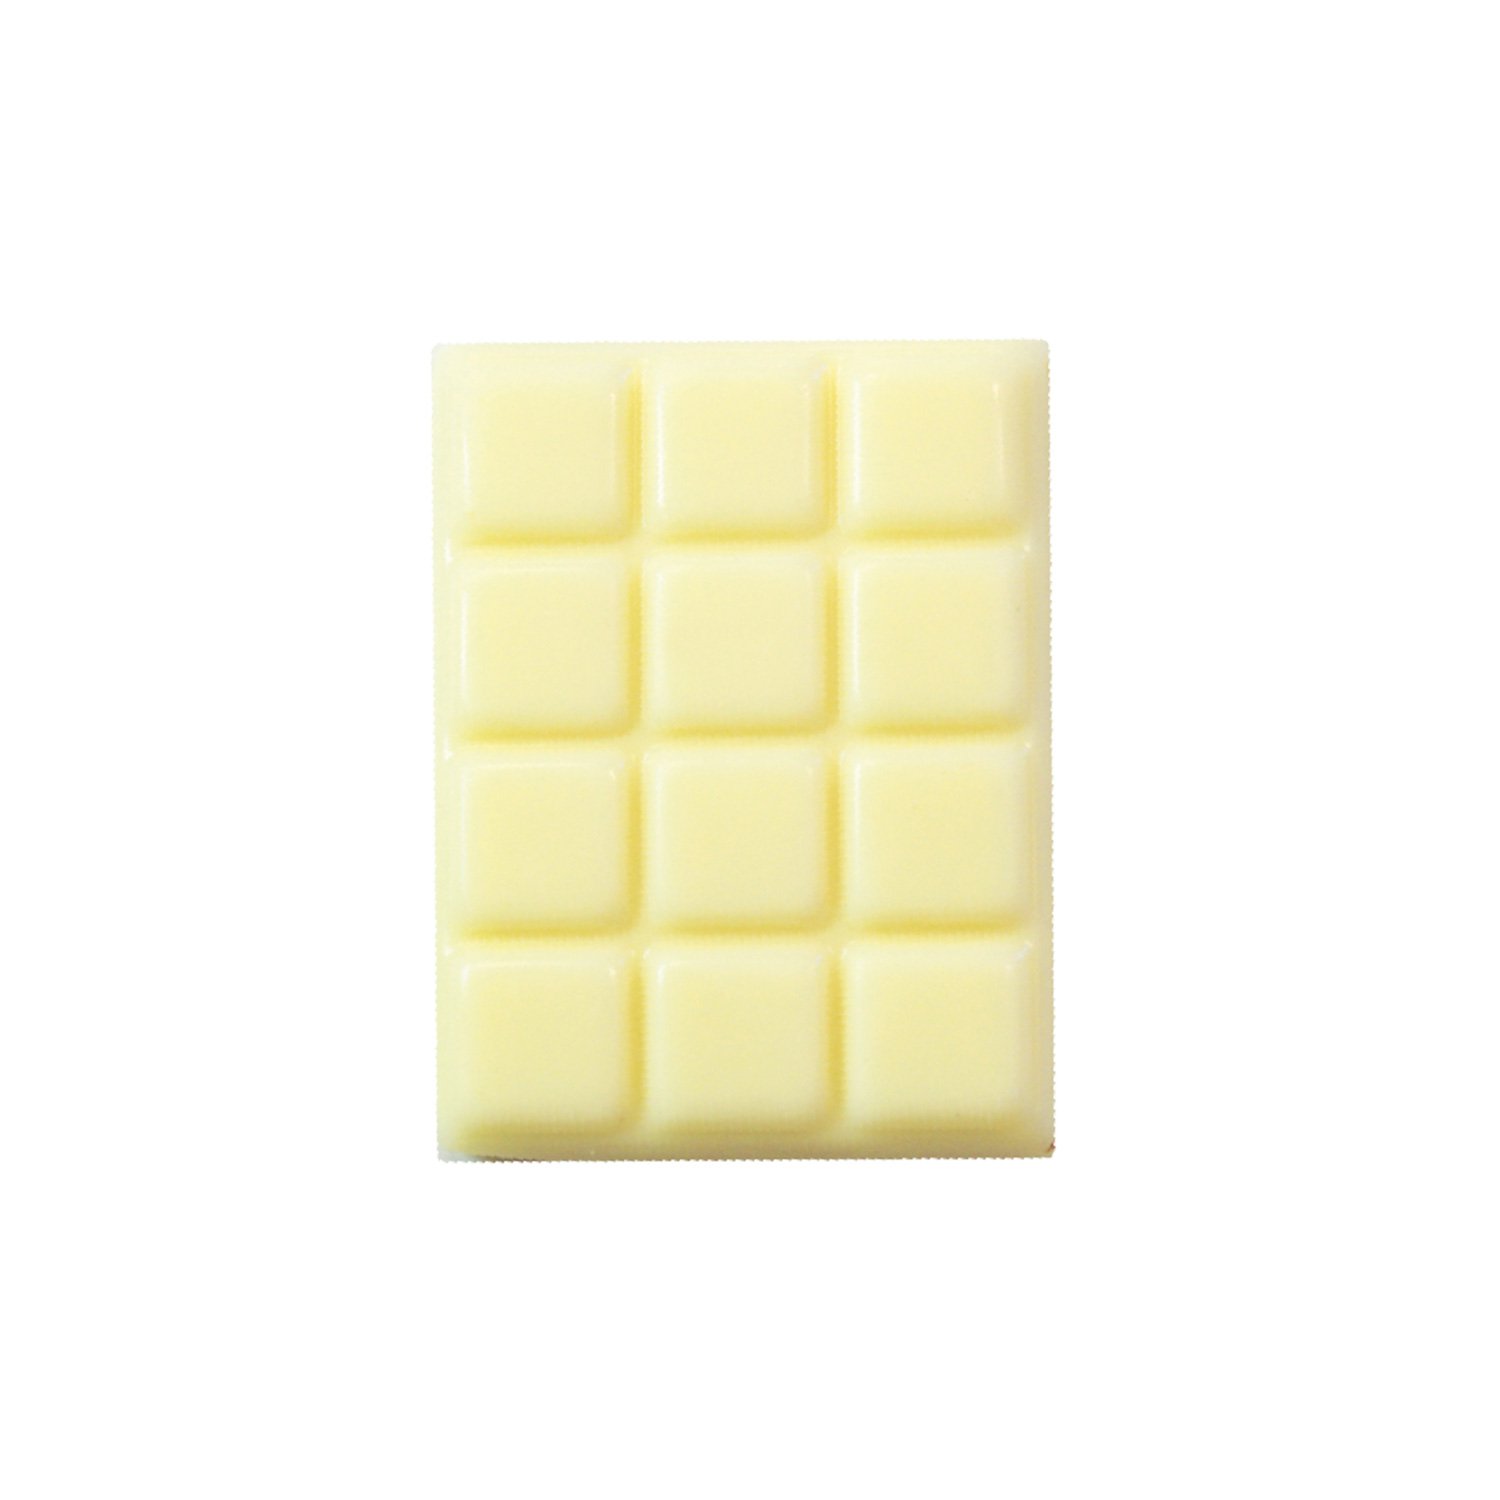 Décor en chocolat : 20 mini tablettes en chocolat blanc